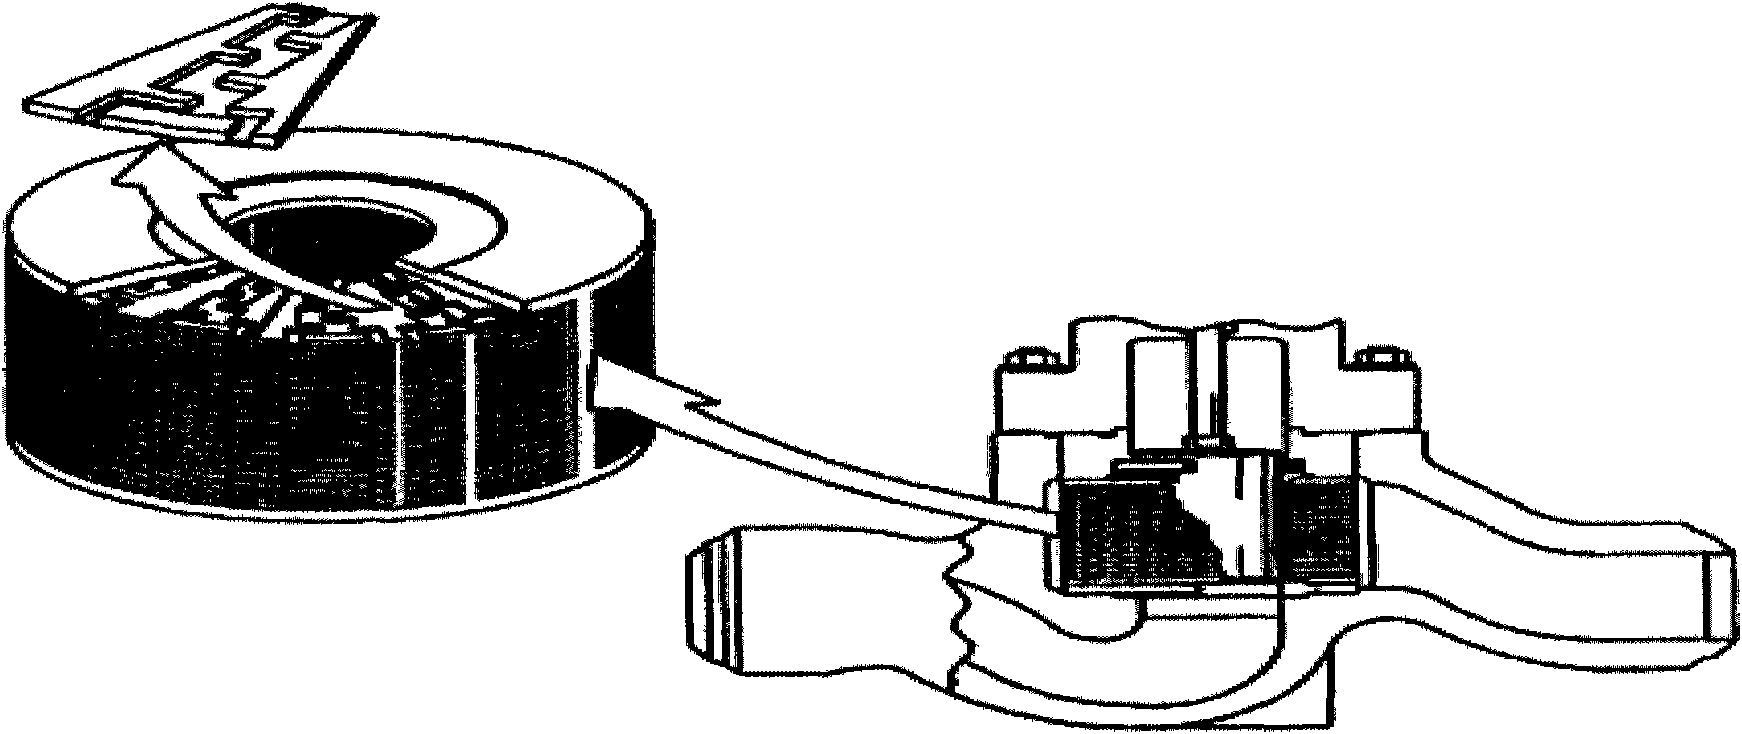 Labyrinth type regulating valve pressure reducing device